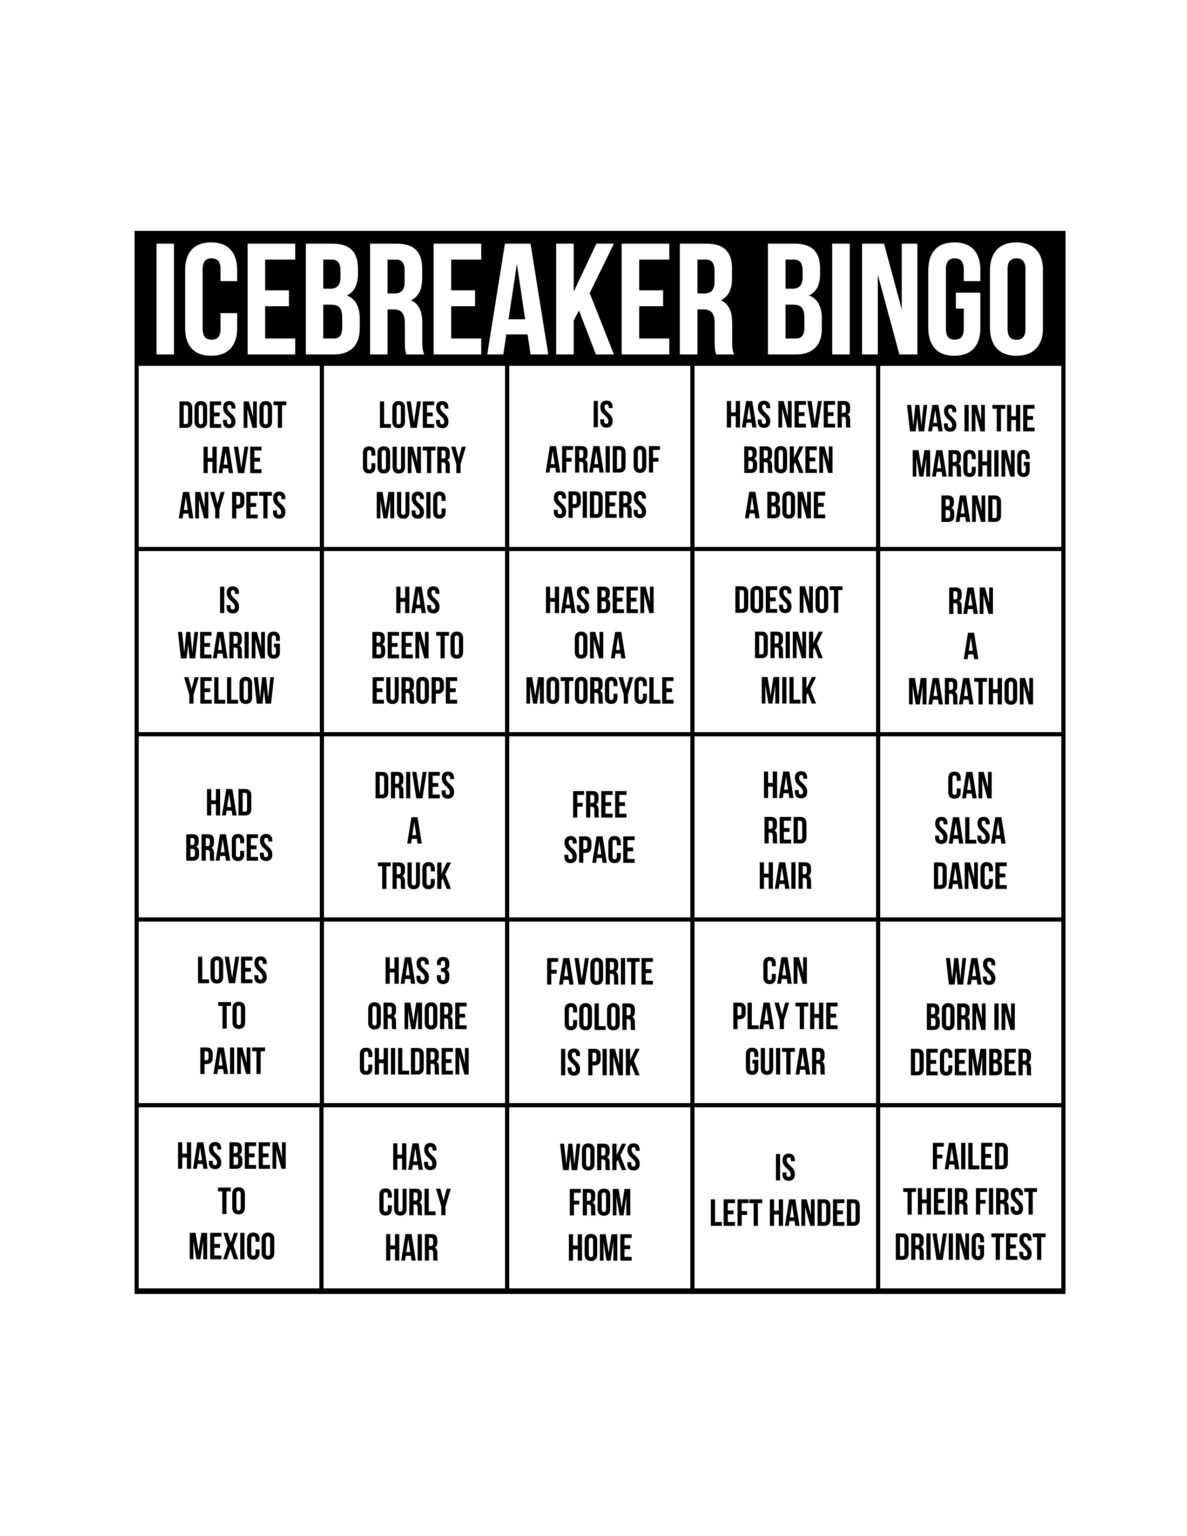 24-images-of-icebreaker-bingo-game-template-for-work-with-ice-breaker